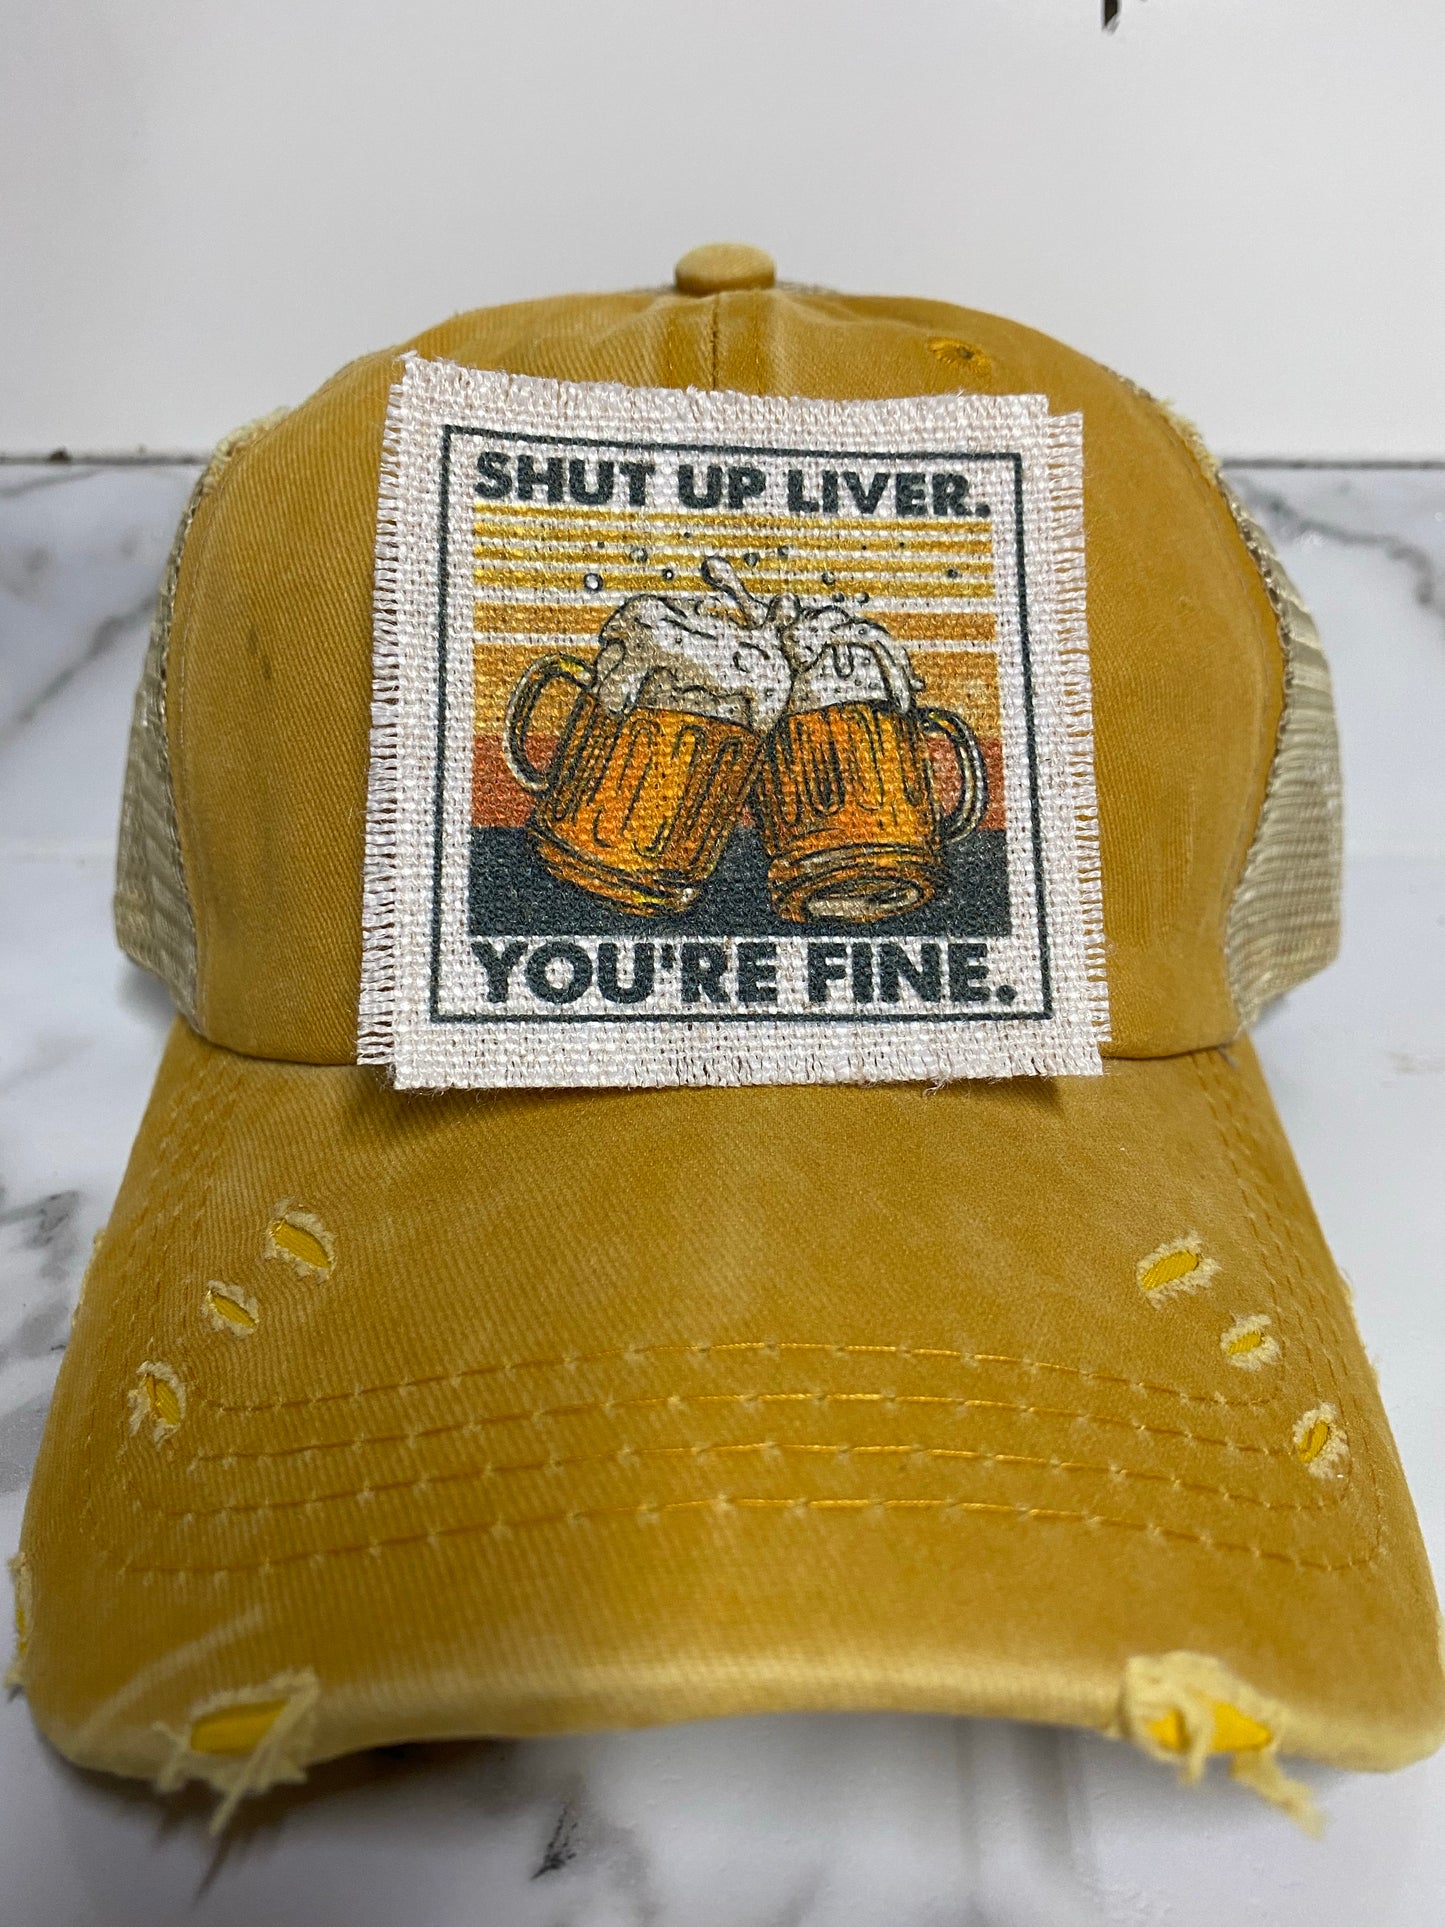 Shut Up Liver Hat Patch